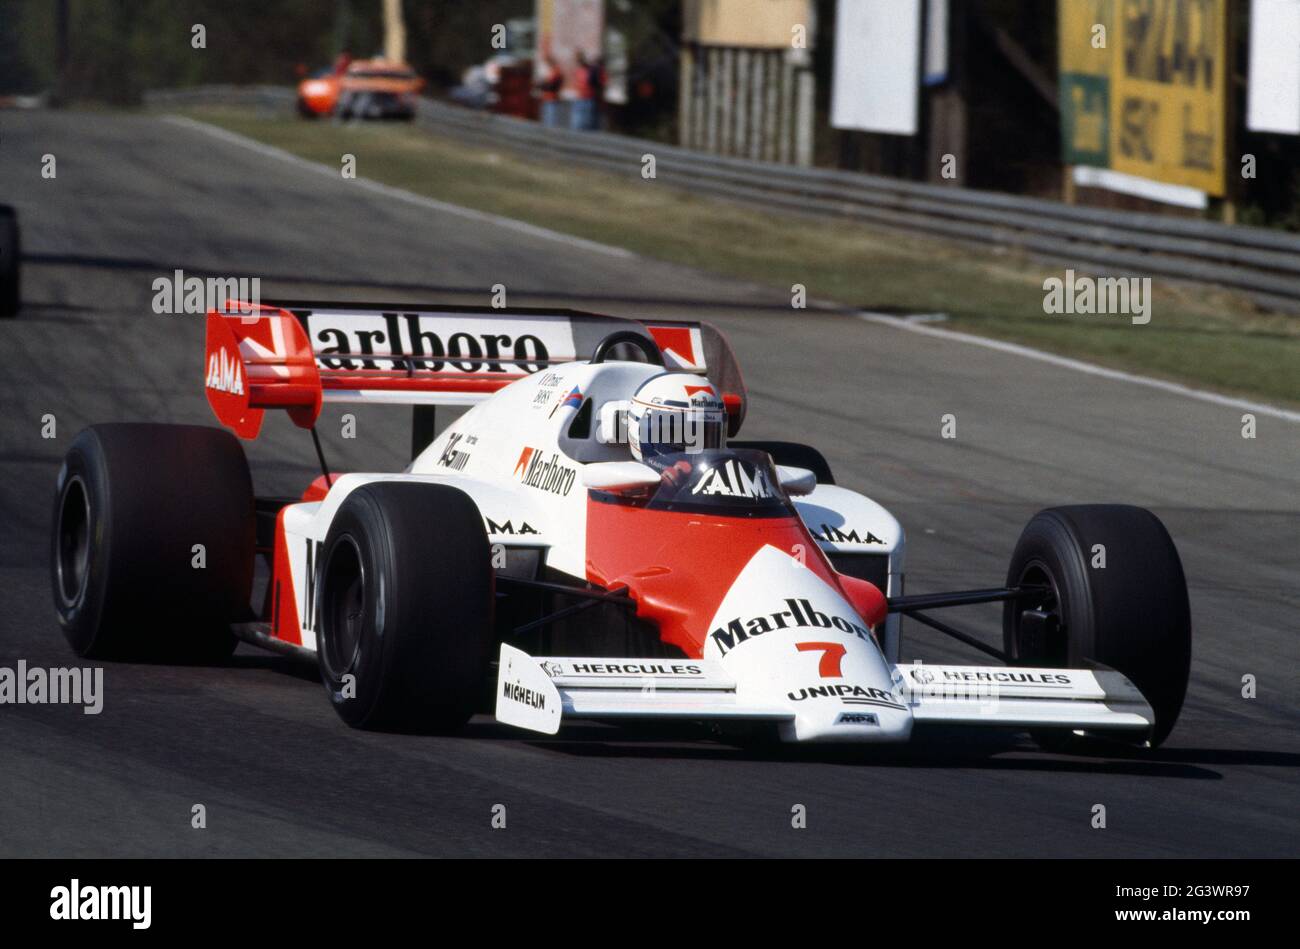 Alain Prost. Grand Prix von Belgien 1984 Stockfoto